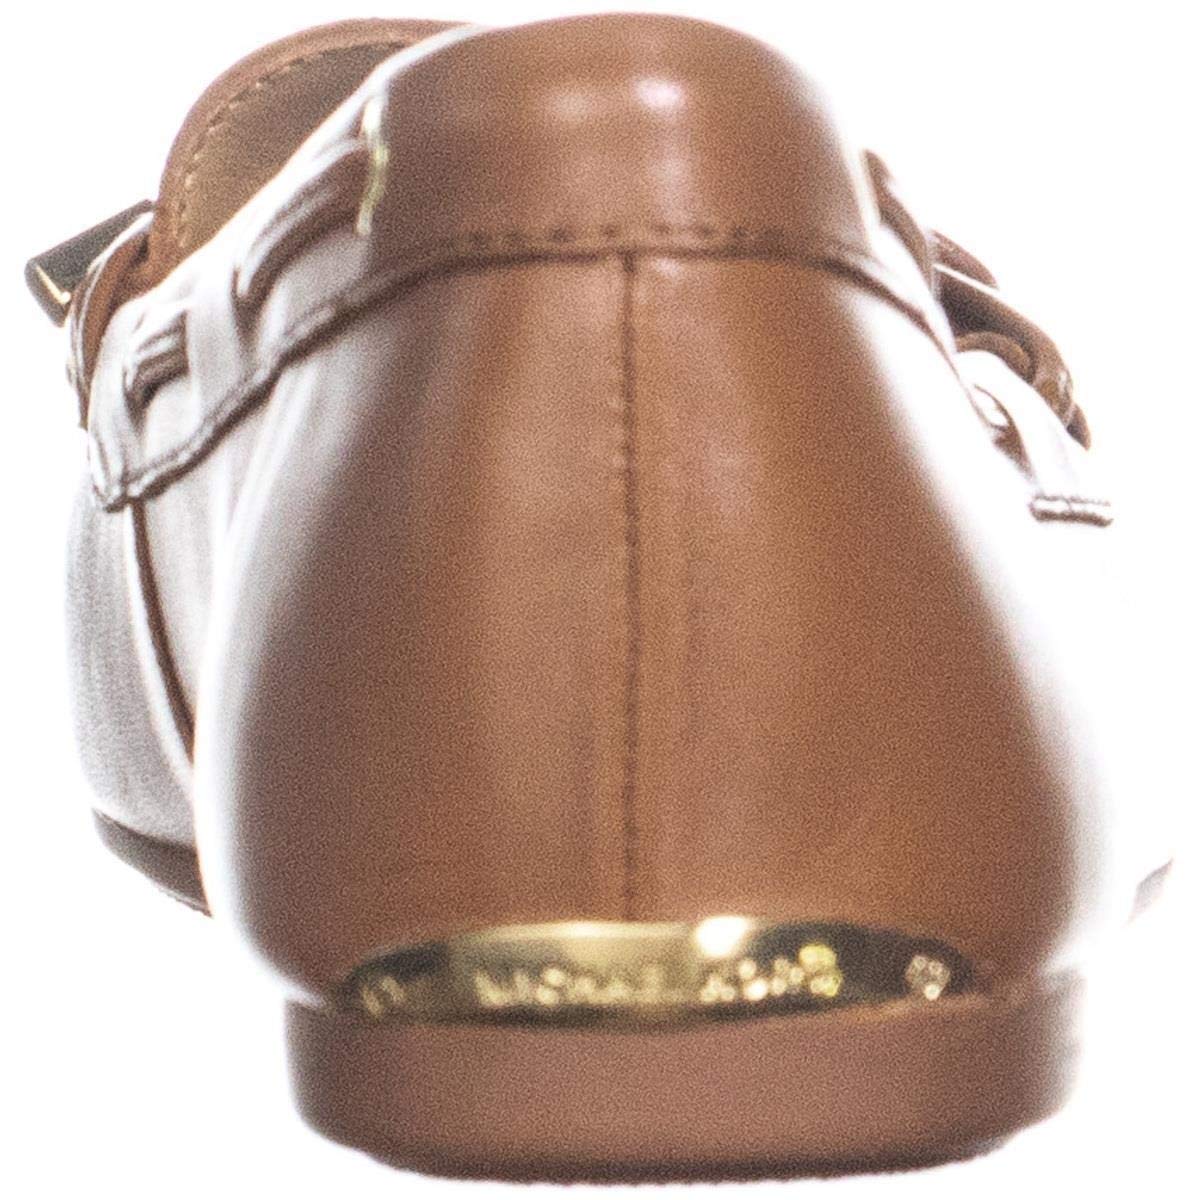 Michael Kors SUTTON MOC Brown Leather Moccasin Loafer Shoes Women Sz 5 M   eBay